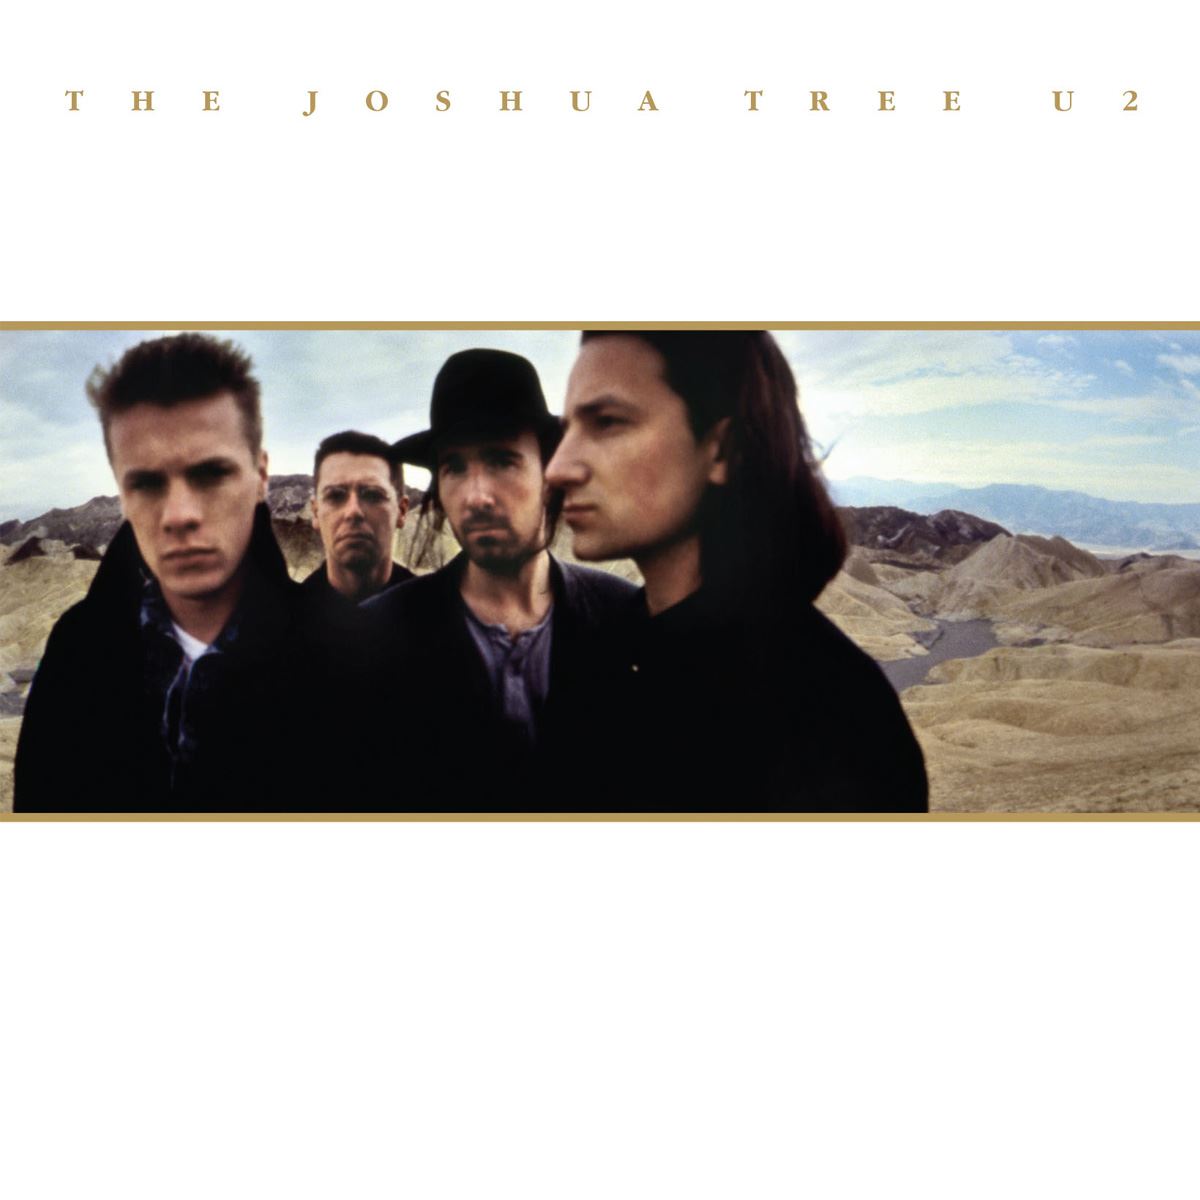 CD U2 The Joshua Tree [Deluxe]